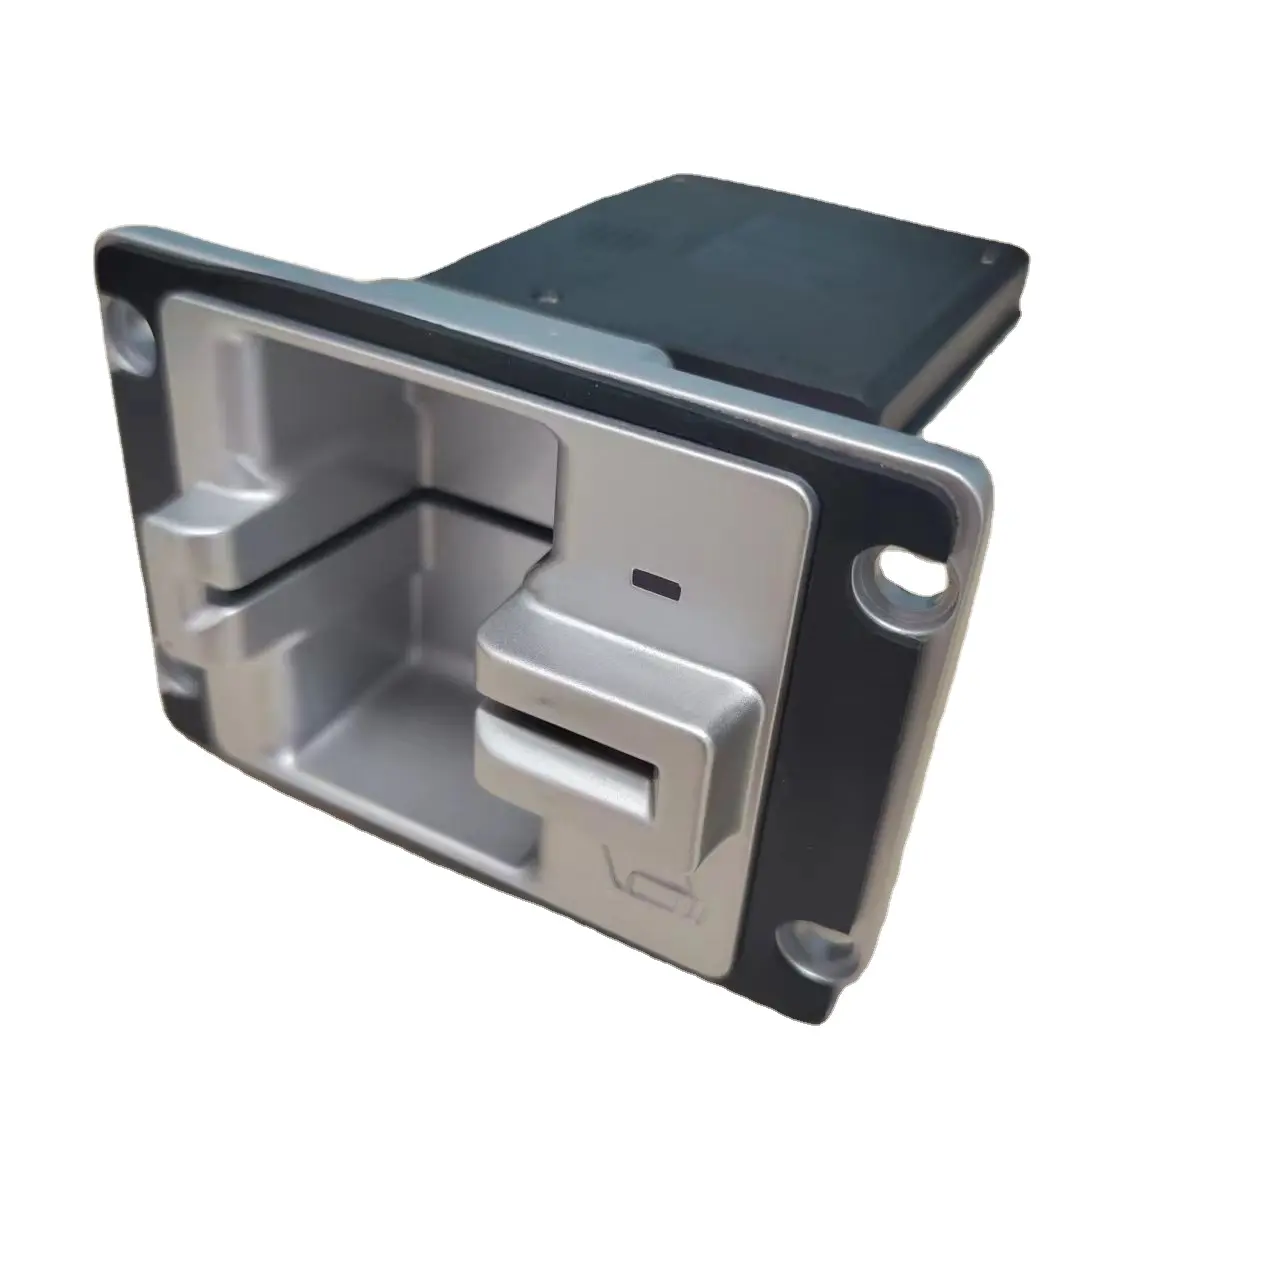 Manual Insert Type Mini Kiosk Vending Machine Magnetic IC RFID Smart Chip ID Card Reader MT188